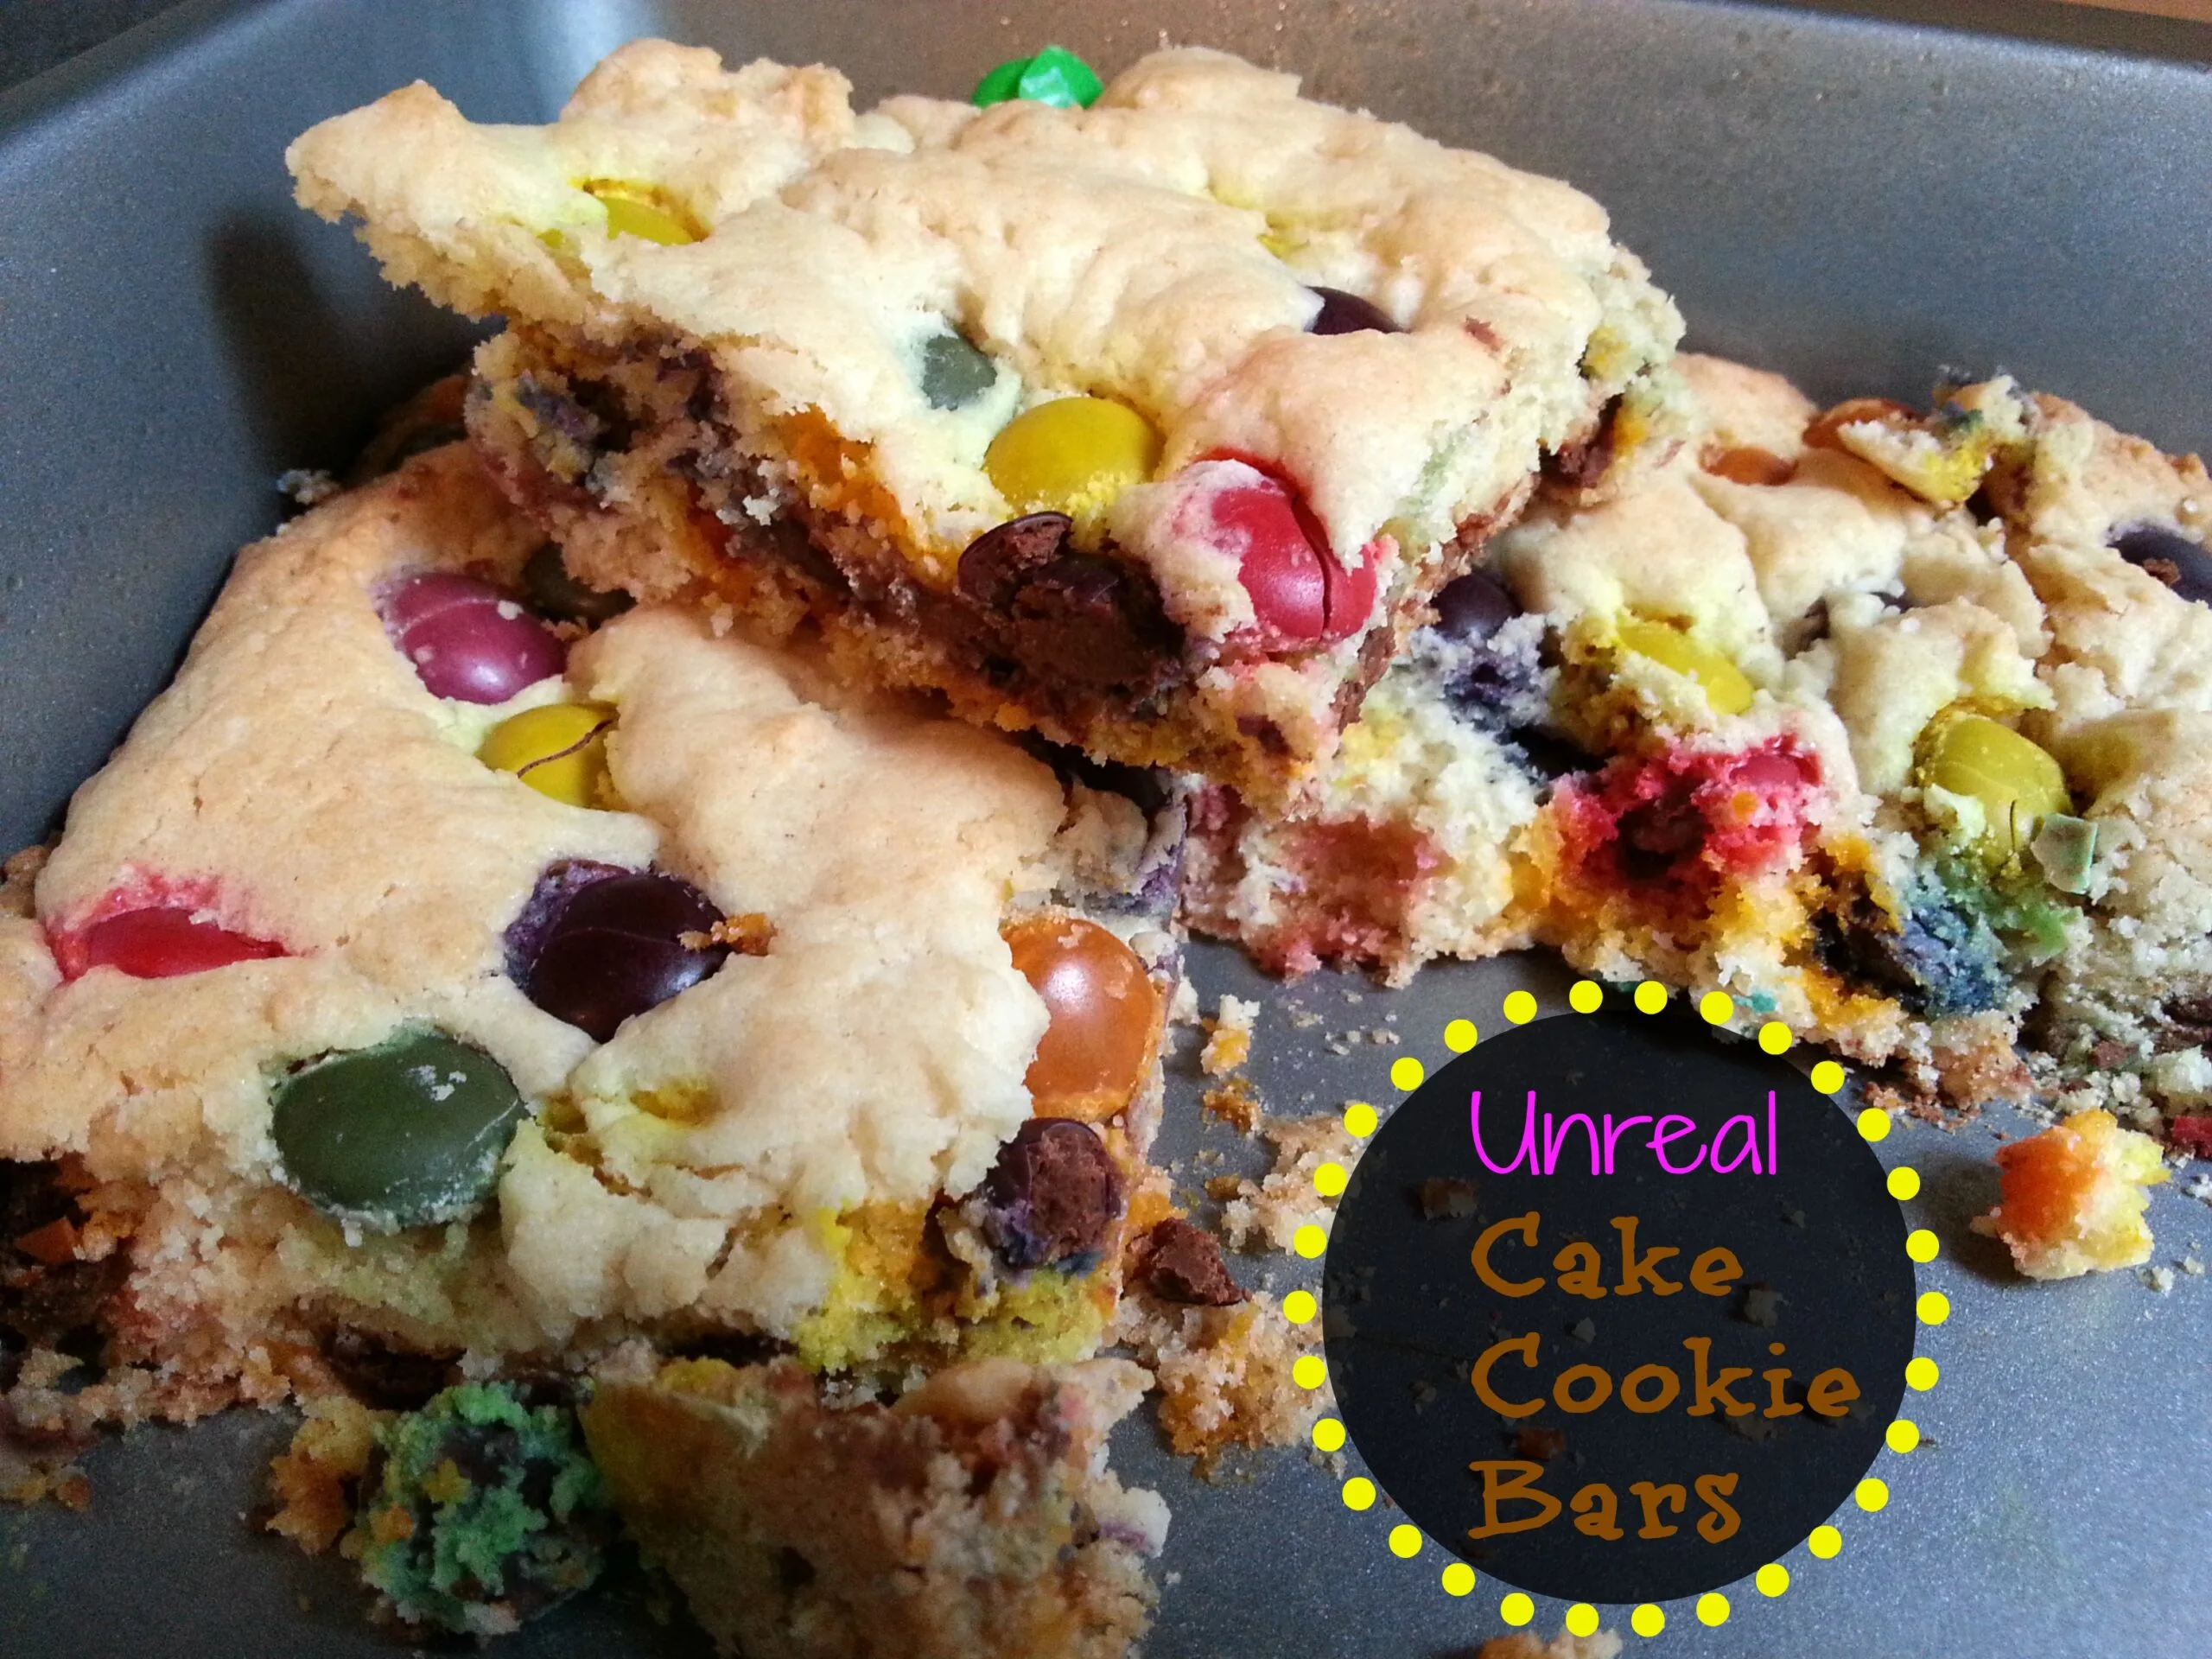 Unreal Cake Cookie Bars Recipe @darcyz #sweets